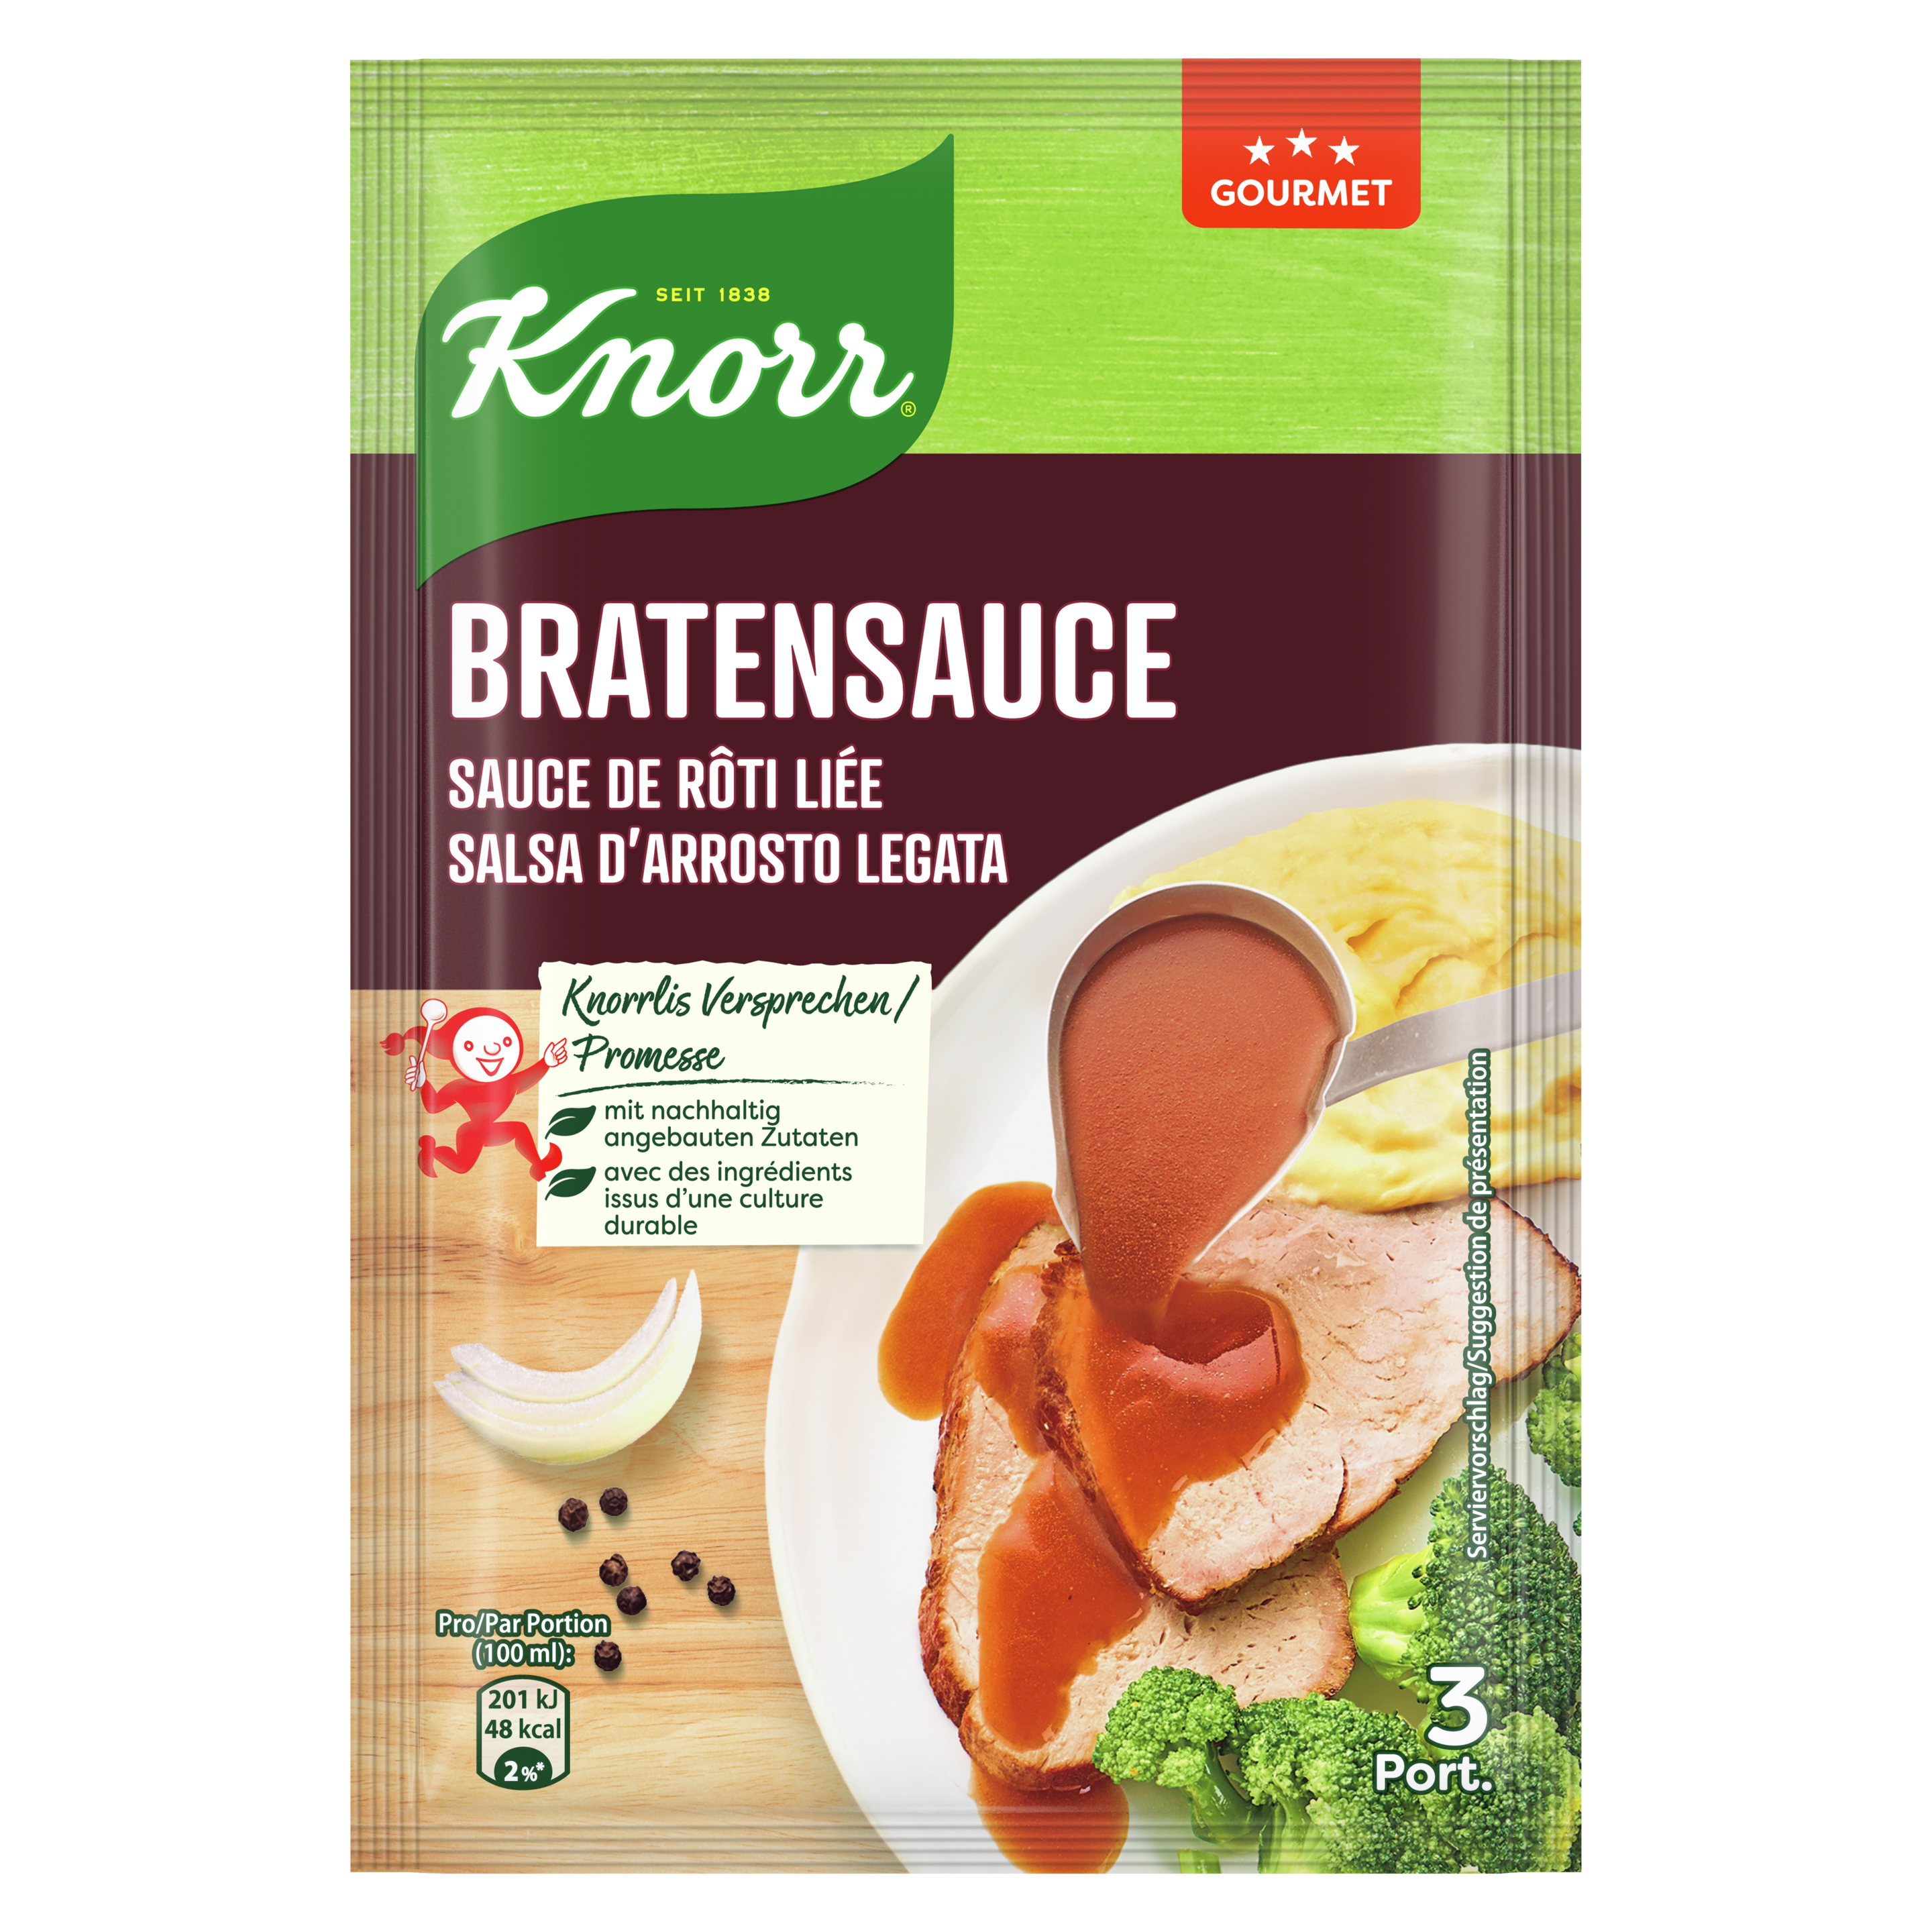 KNORR Bratensauce Gourmet Beutel 3 Portionen